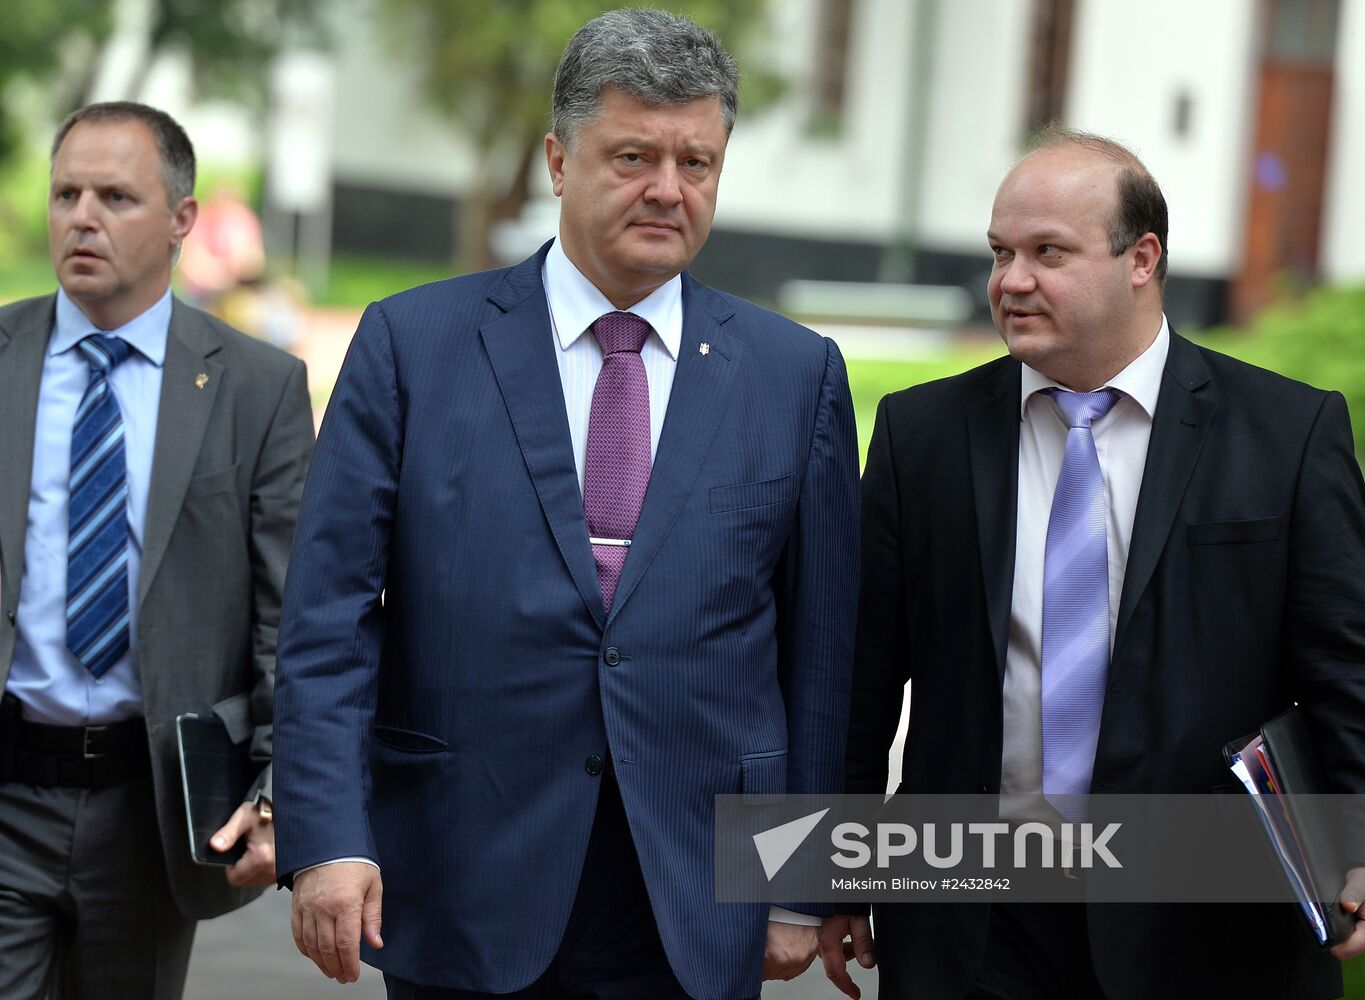 Candidate for president of Ukraine P.Poroshenko at presentation of Institute of World Economy